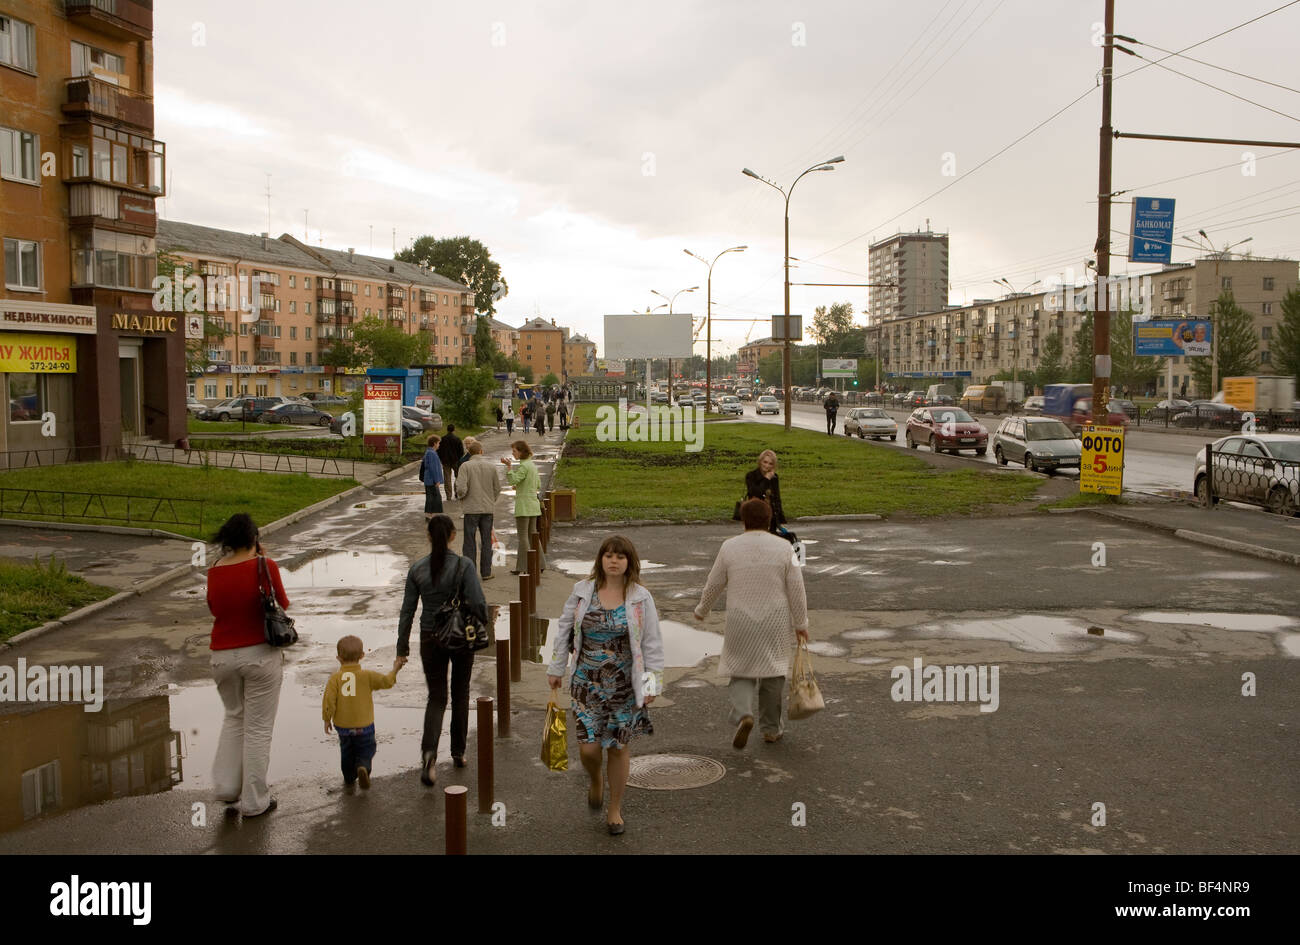 Pedestrians walking on pavement in city, Ekaterinburg, Uralmash, Russia Stock Photo